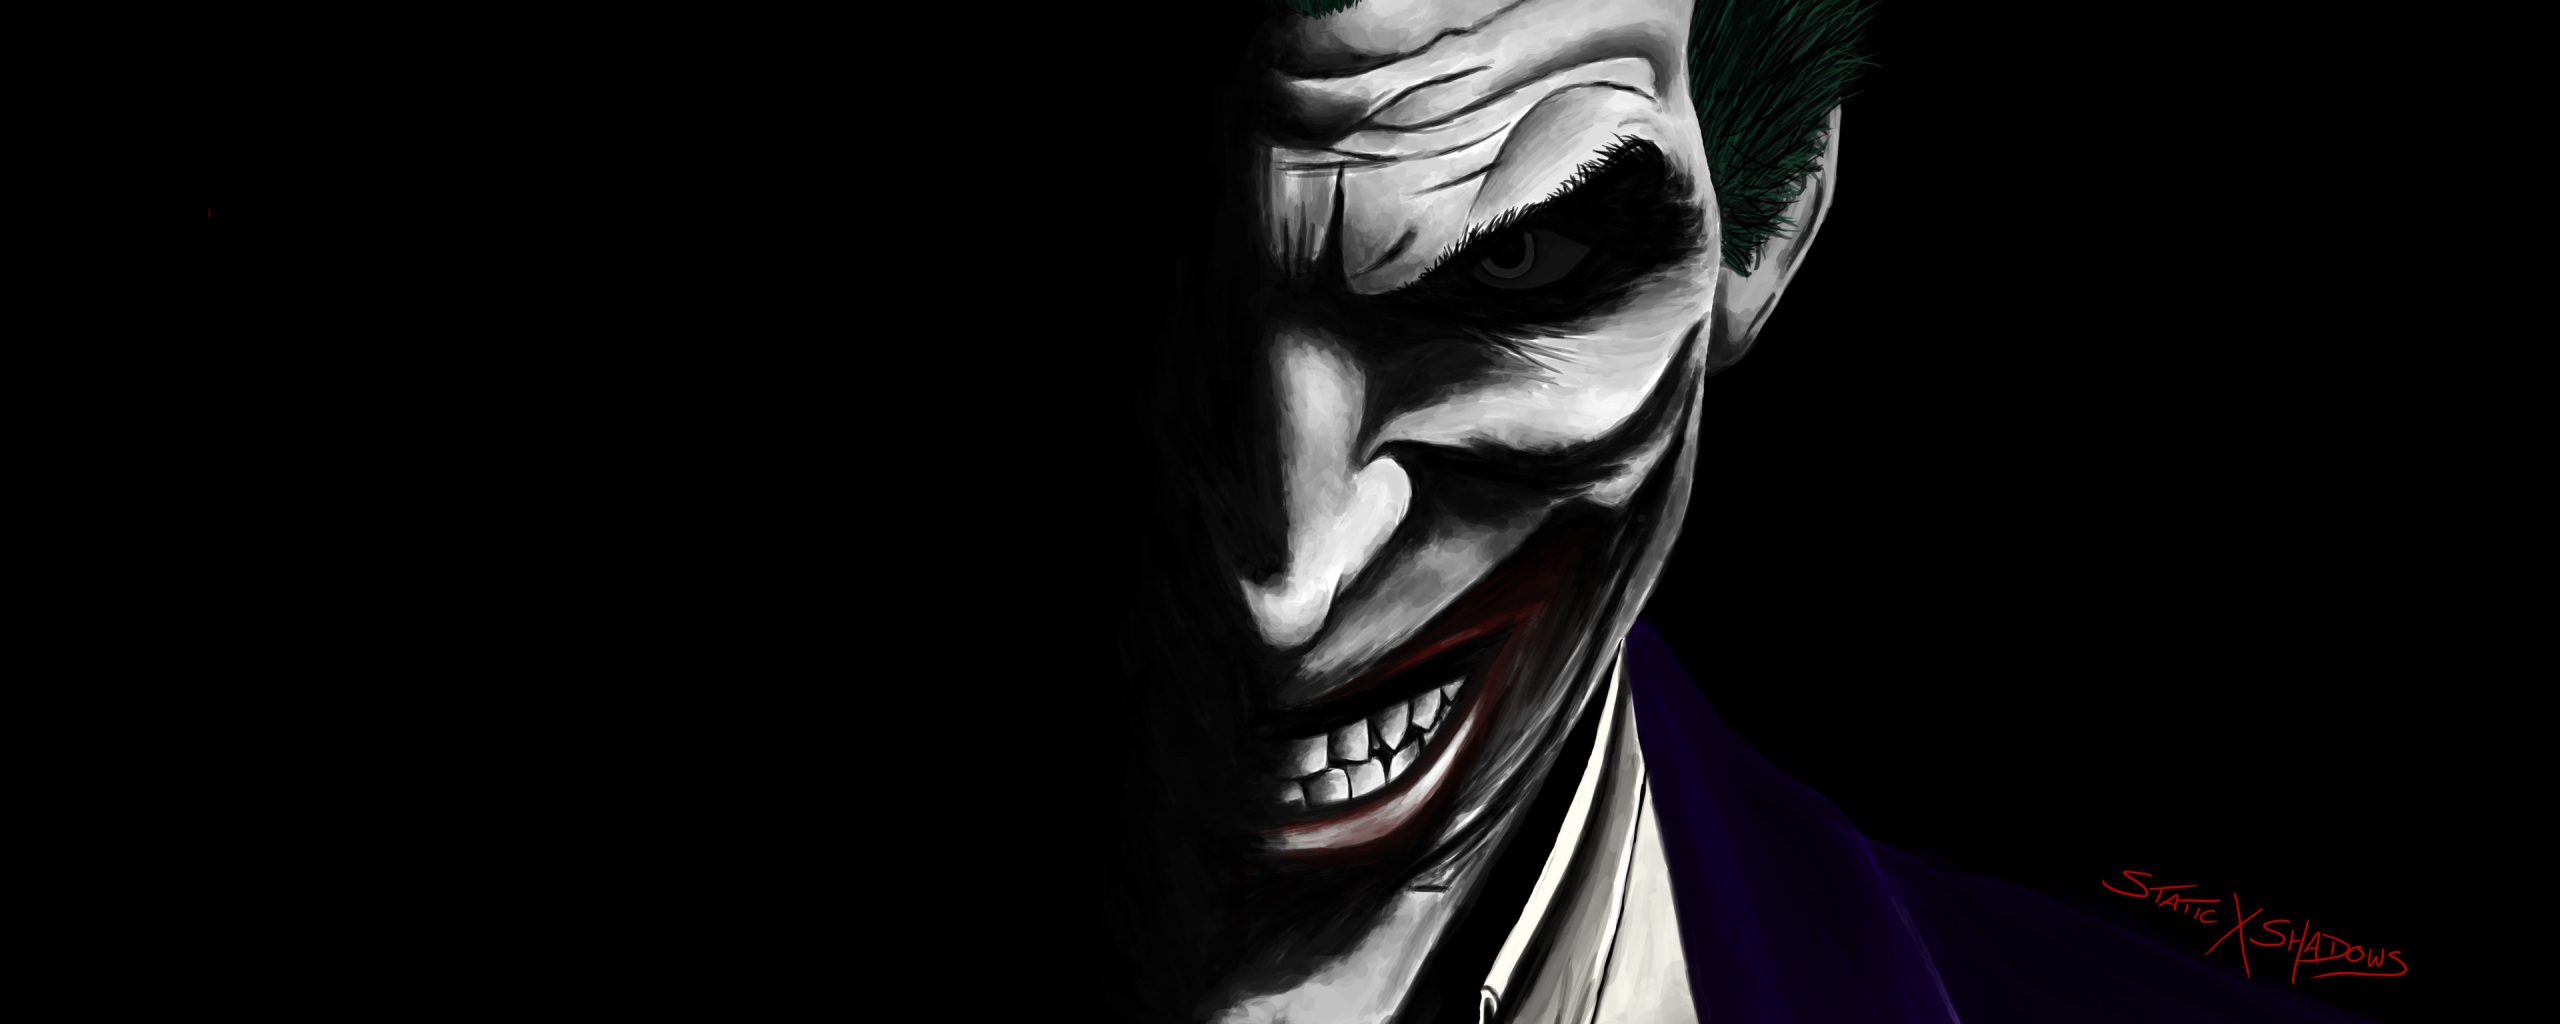 Joker Artwork 5k - 4k Wallpapers - 40.000+ ipad wallpapers 4k - 4k ...